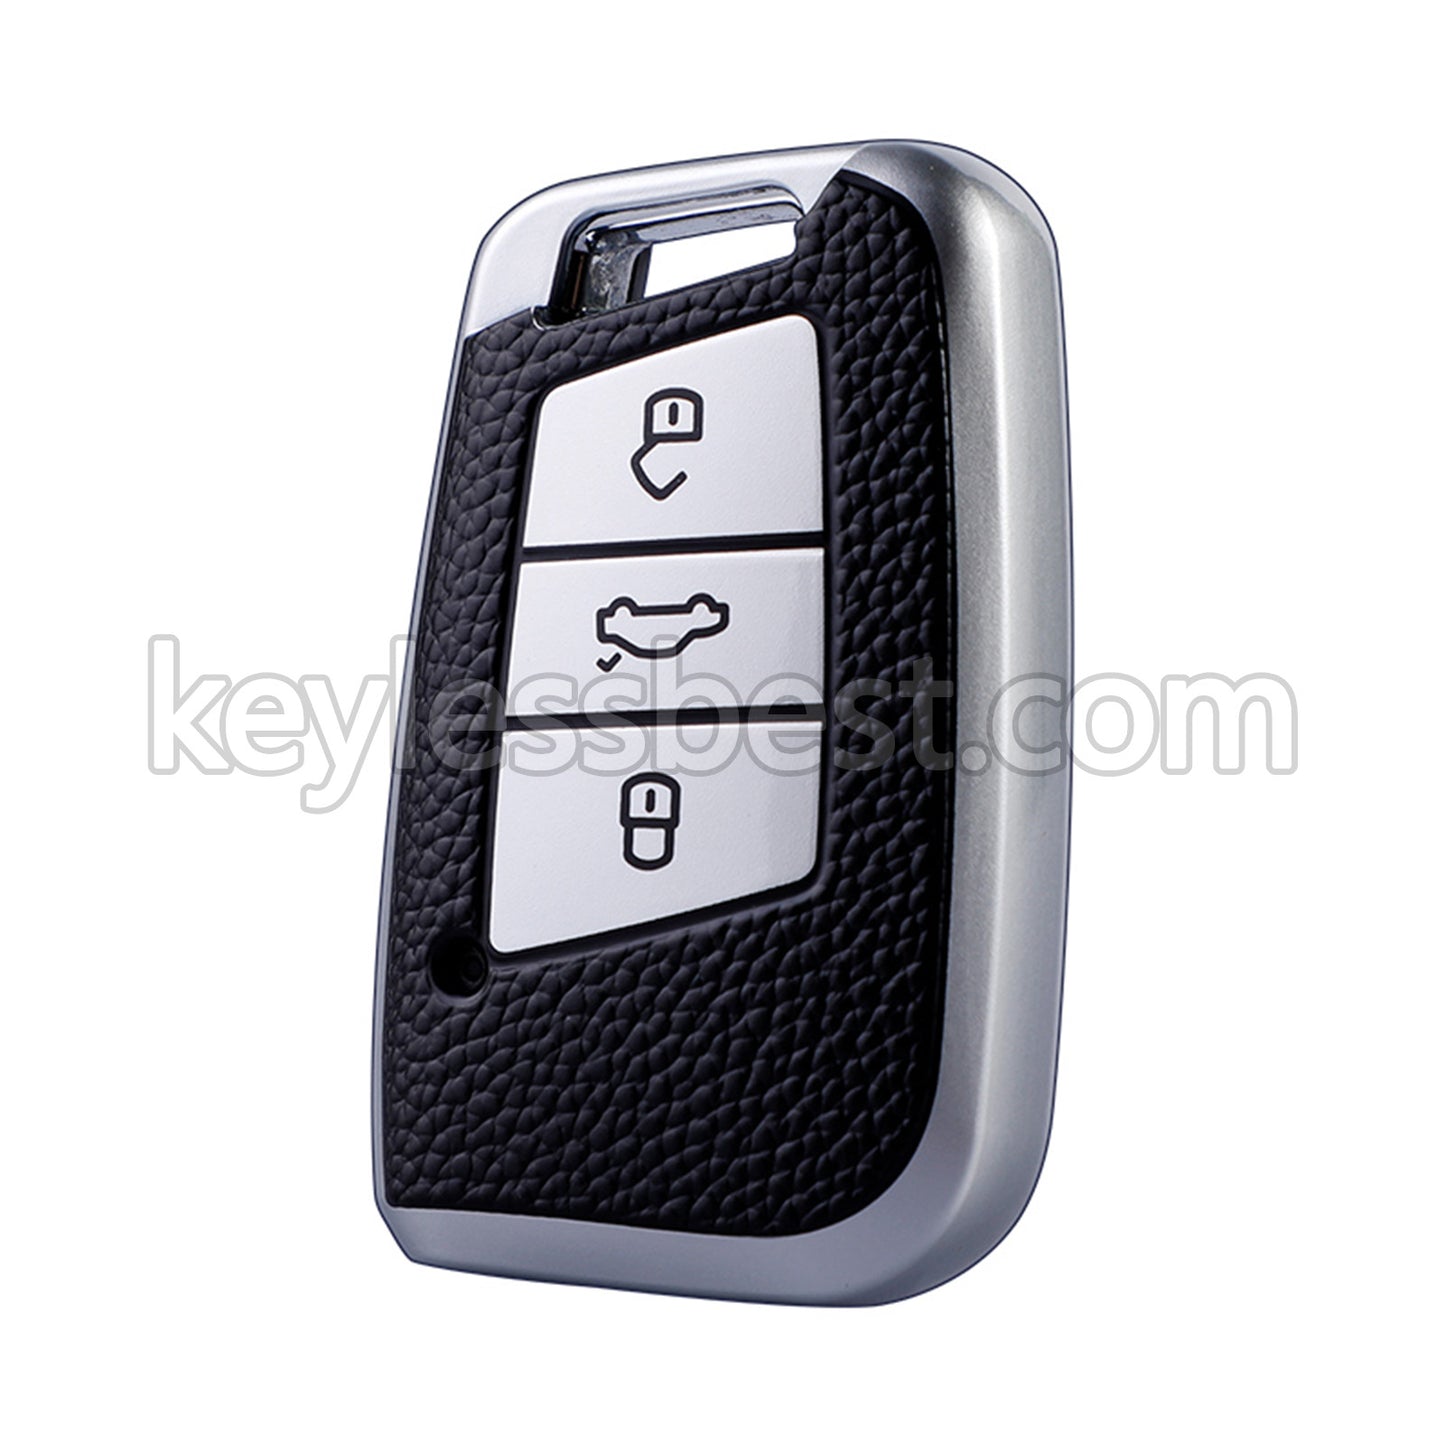 TPU Car Key cover For Volkswagen Car Key cover case holder